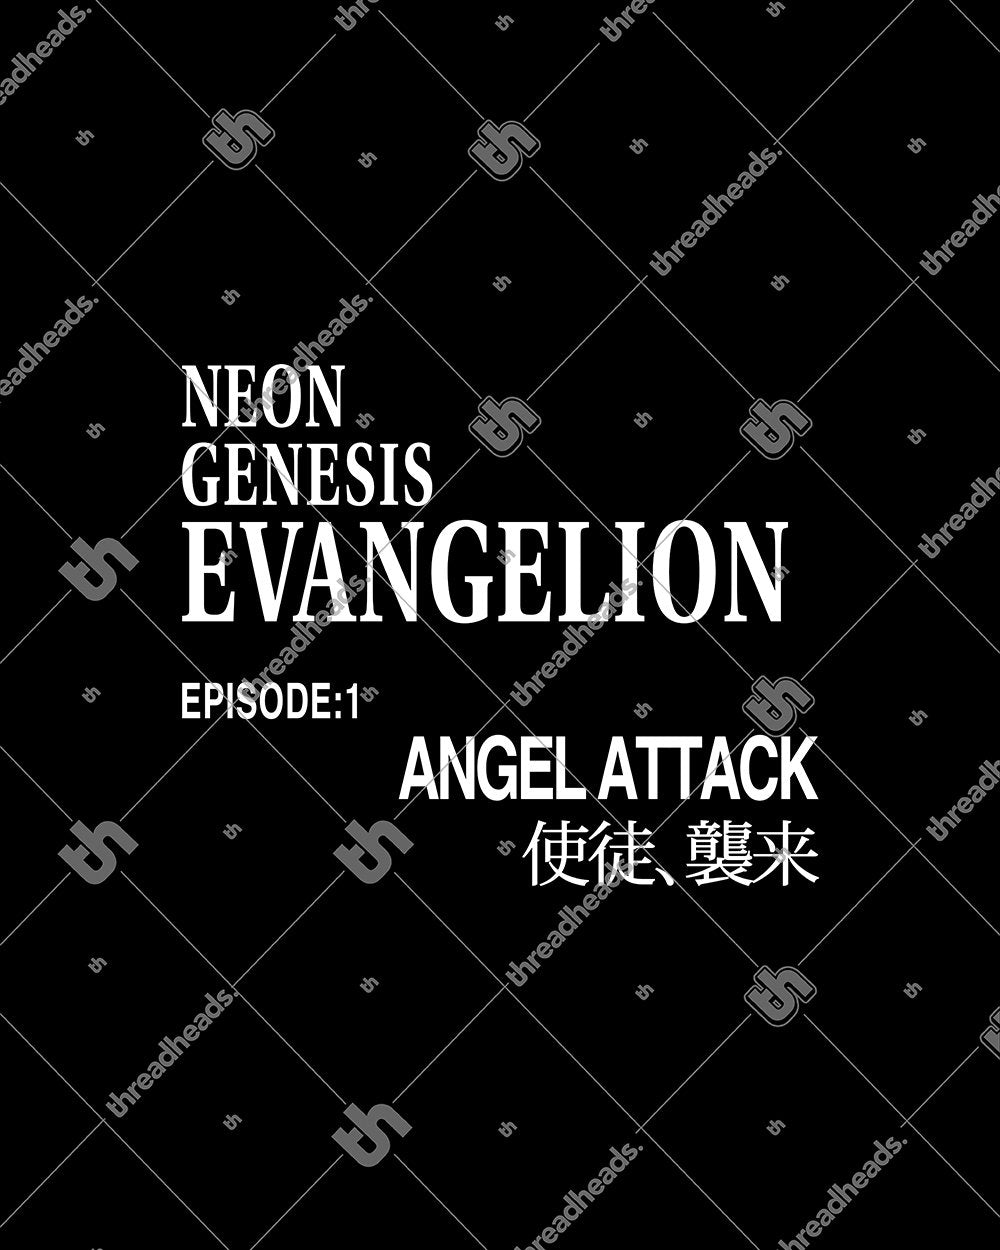 Evangelion Episode 1 T-Shirt Europe Online #colour_black